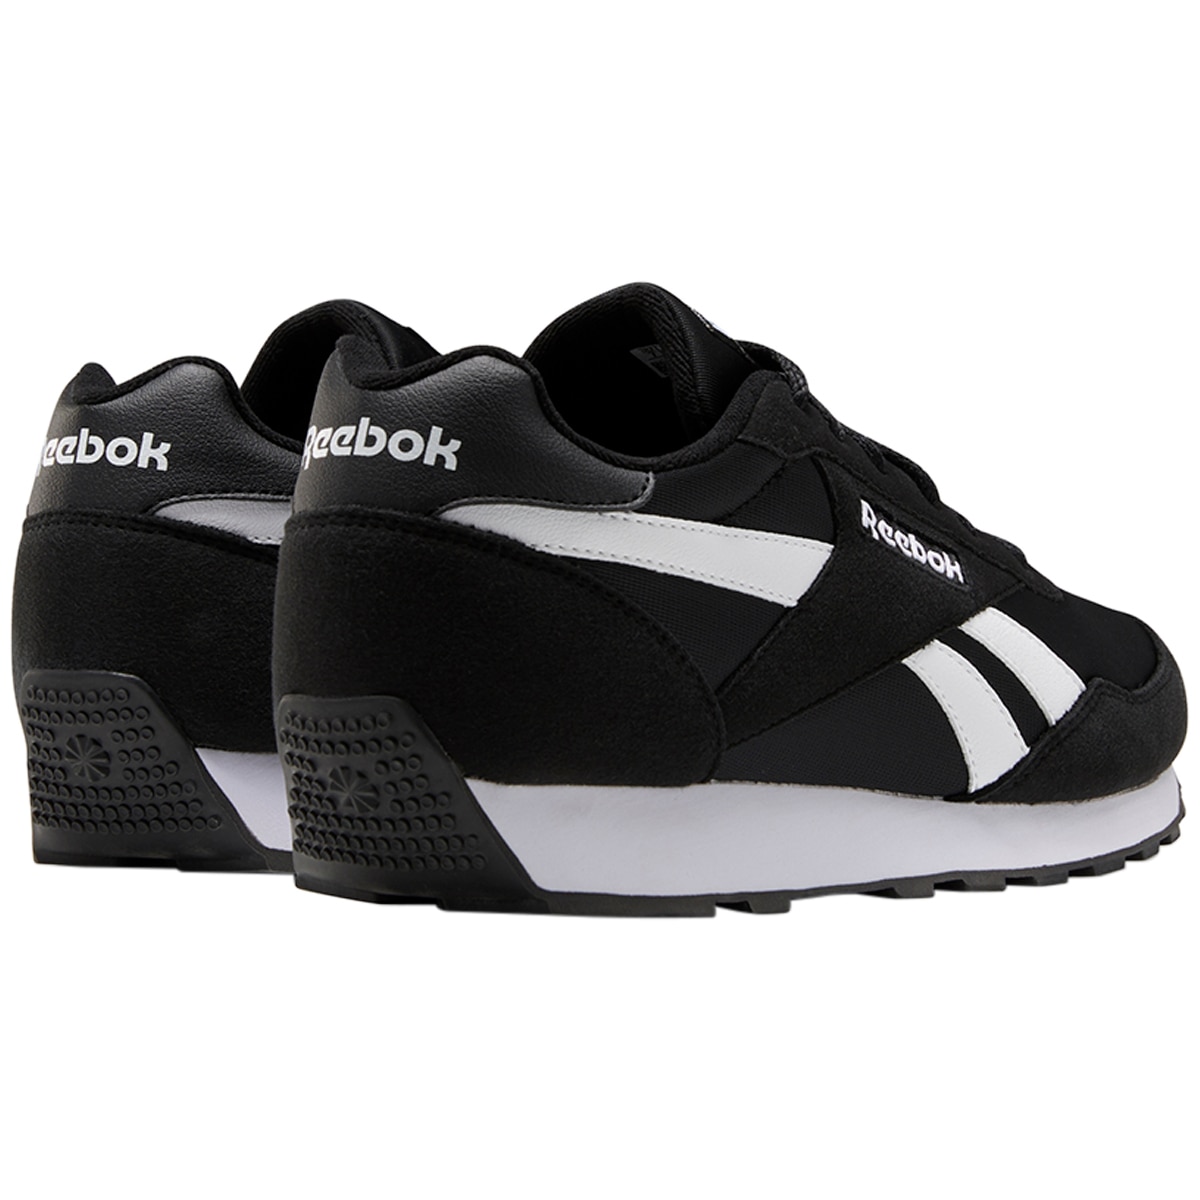 Reebok Rewind shoes - Black